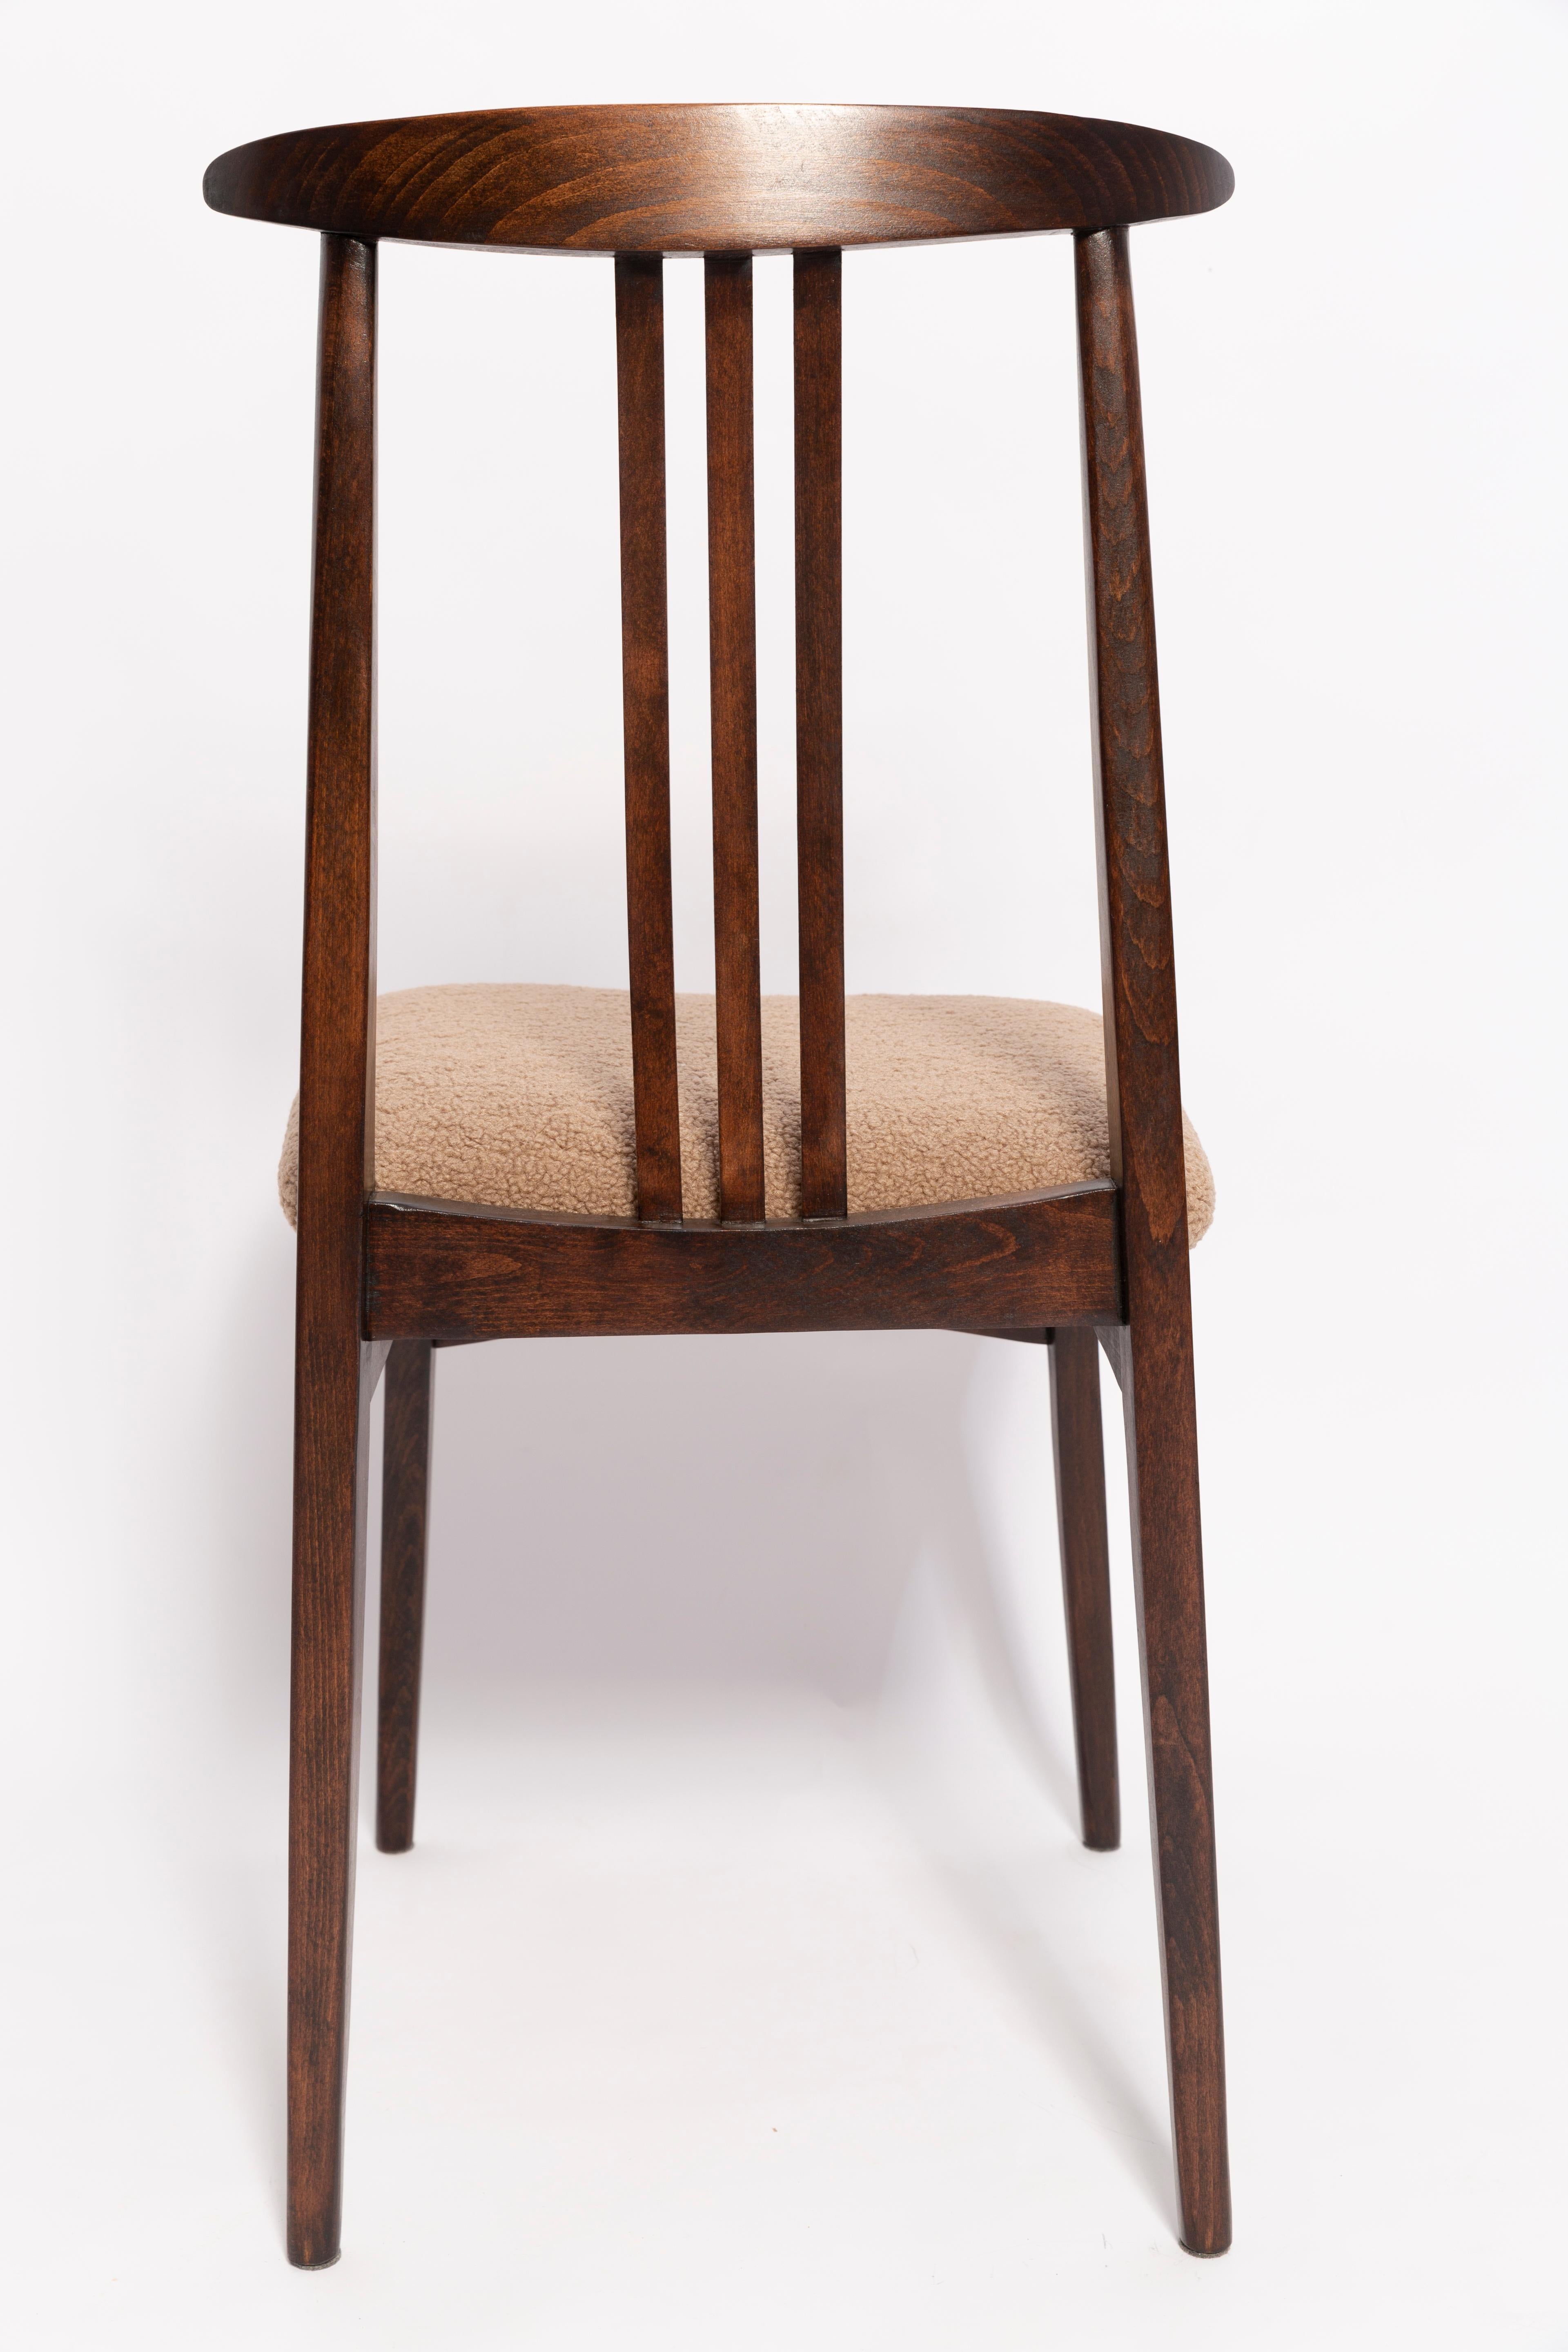 20th Century Twelve Mid-Century Latte Boucle Chairs, Walnut Wood, M. Zielinski, Europe 1960s For Sale